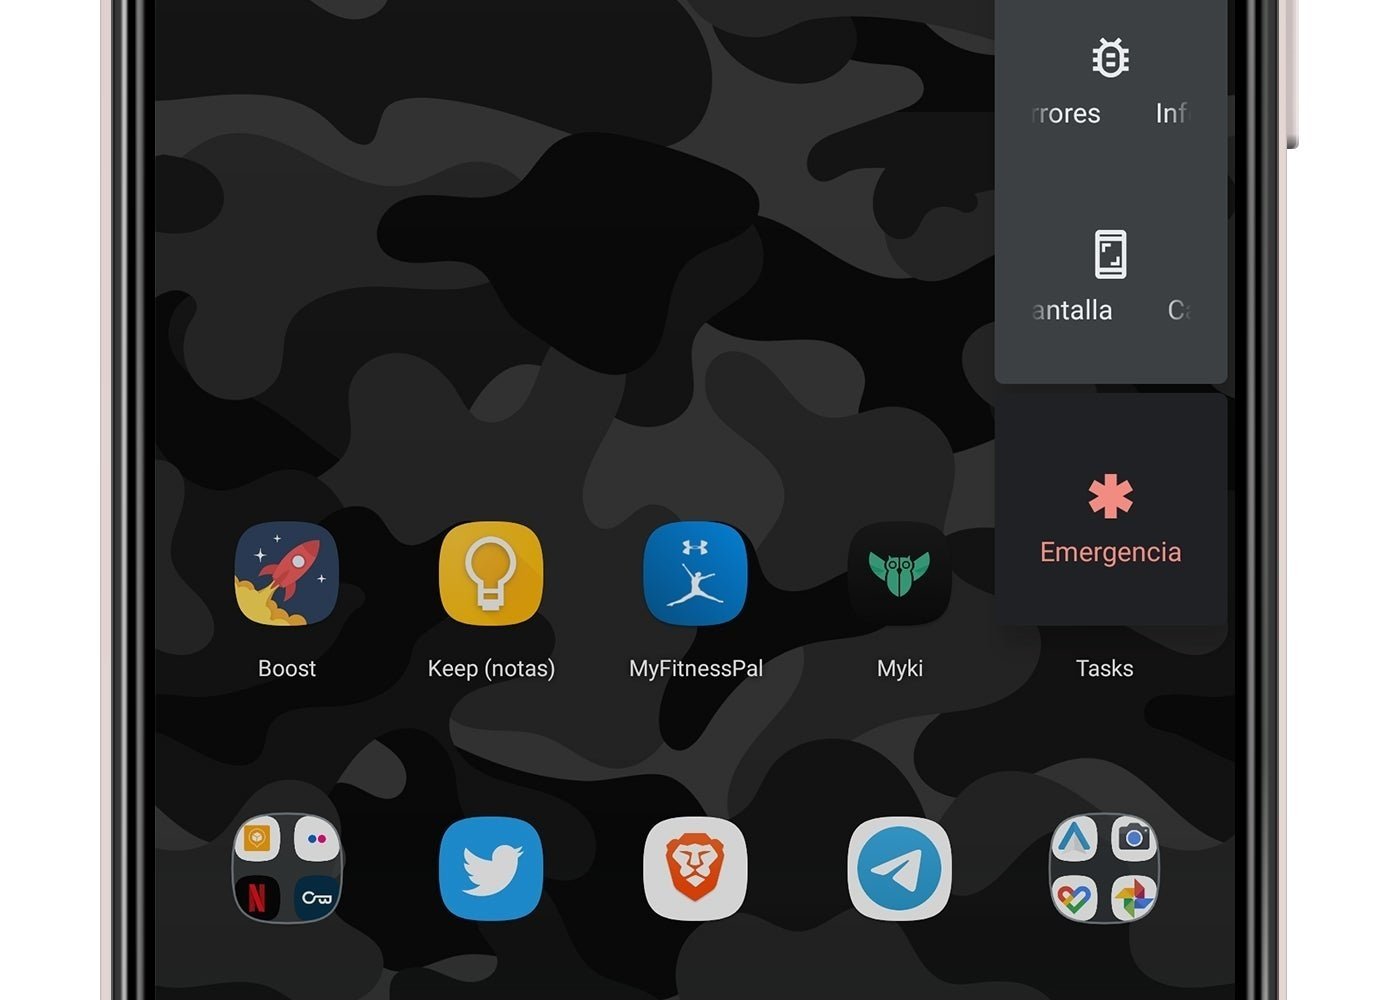 Nuevo icono de emergencia Android Q Beta 6